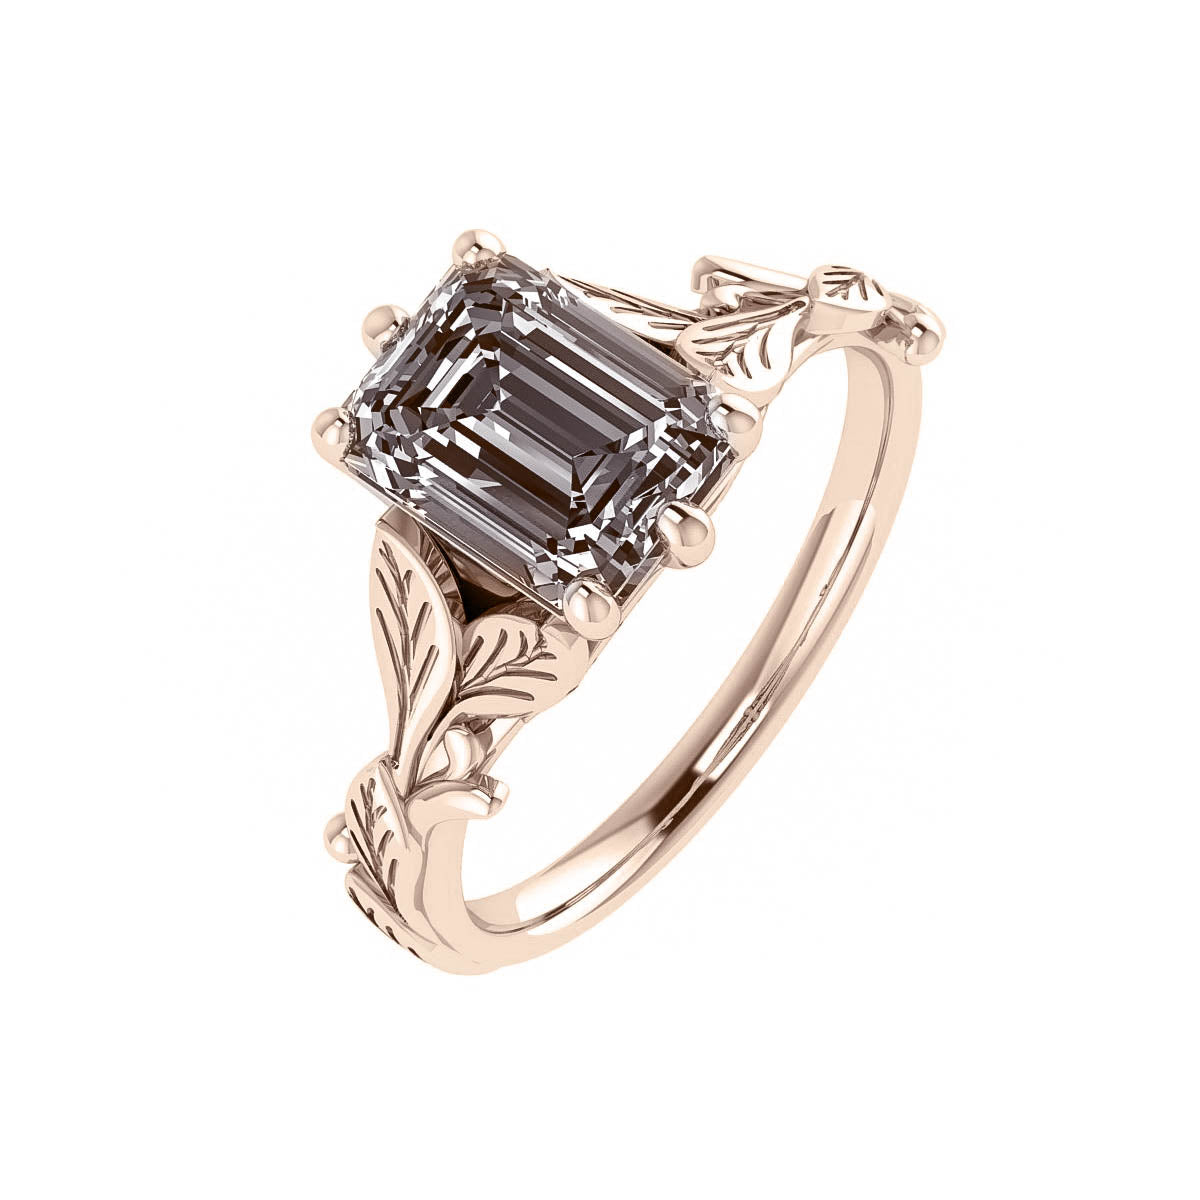 Freesia | custom engagement ring setting, emerald cut 8x6 mm - Eden Garden Jewelry™